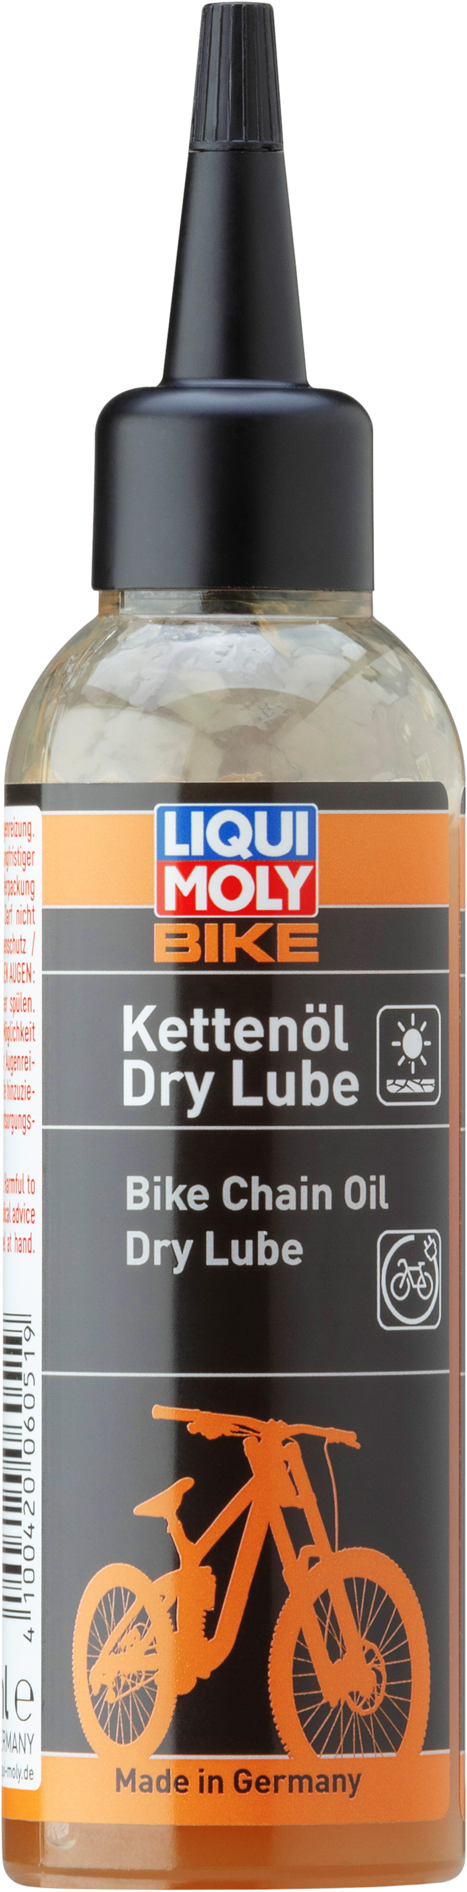 Liqui Moly Bike-kettingolie Dry Lube, 100 ml